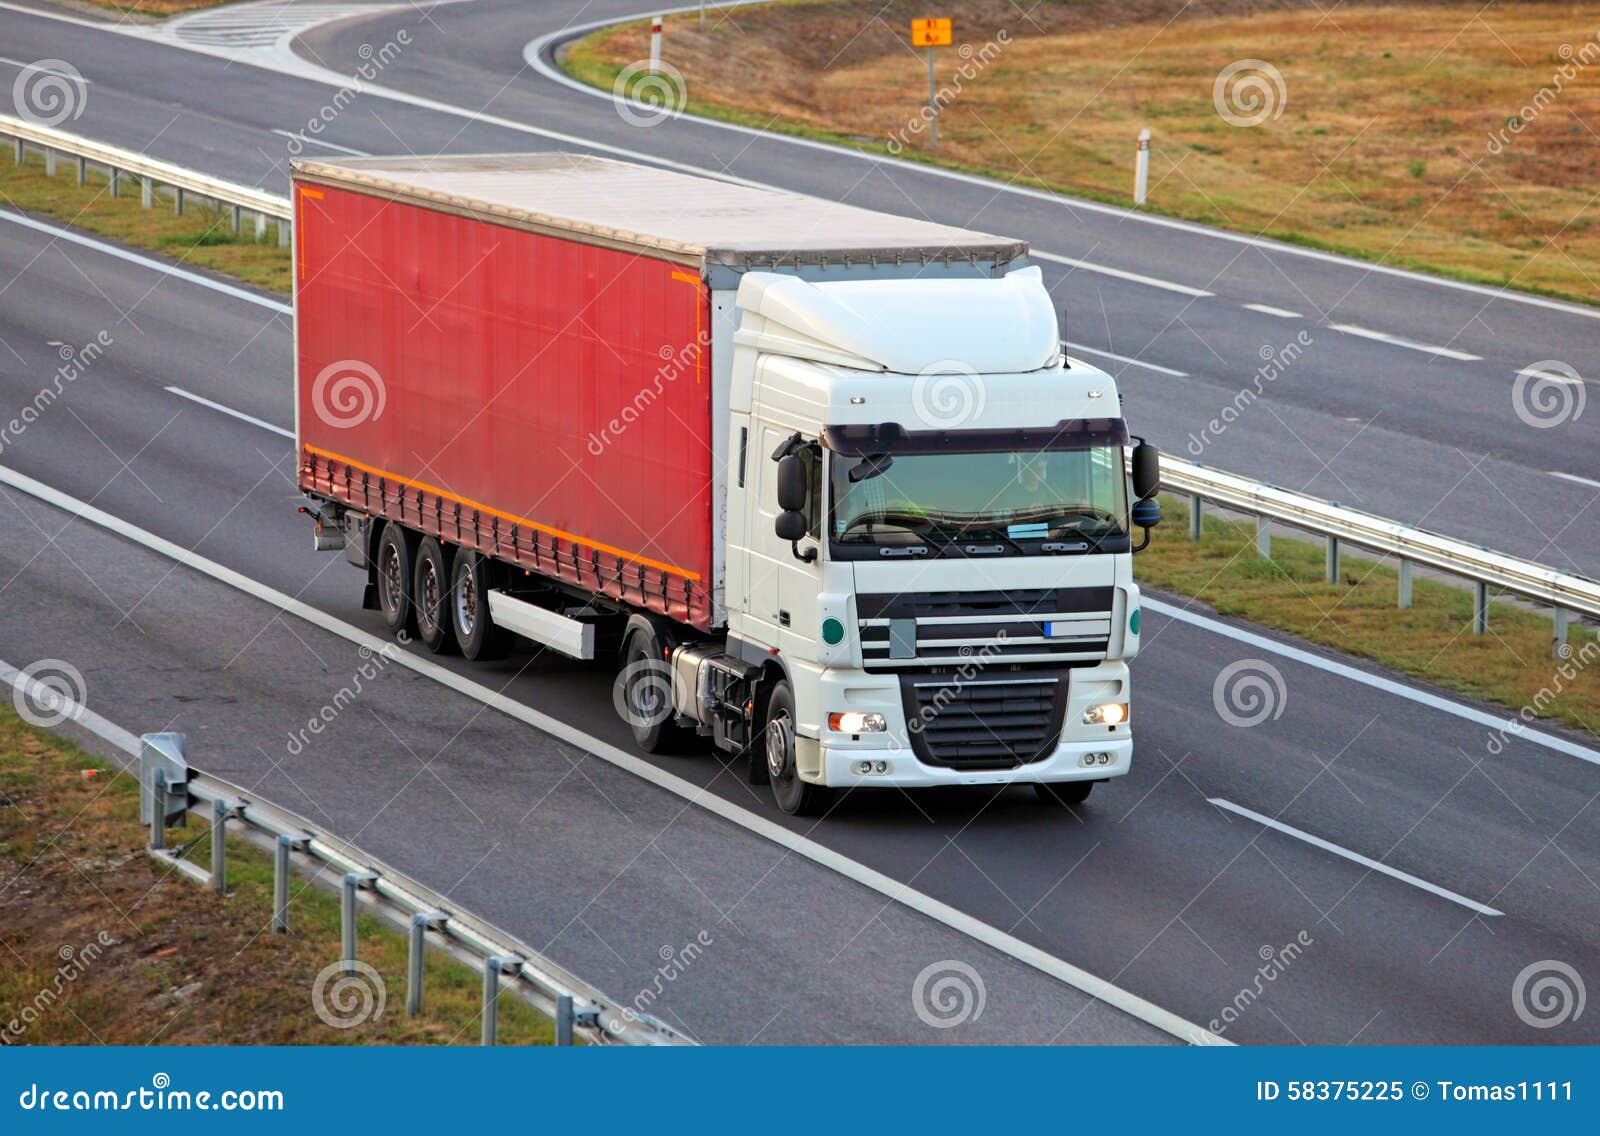 truck on highway, trucking